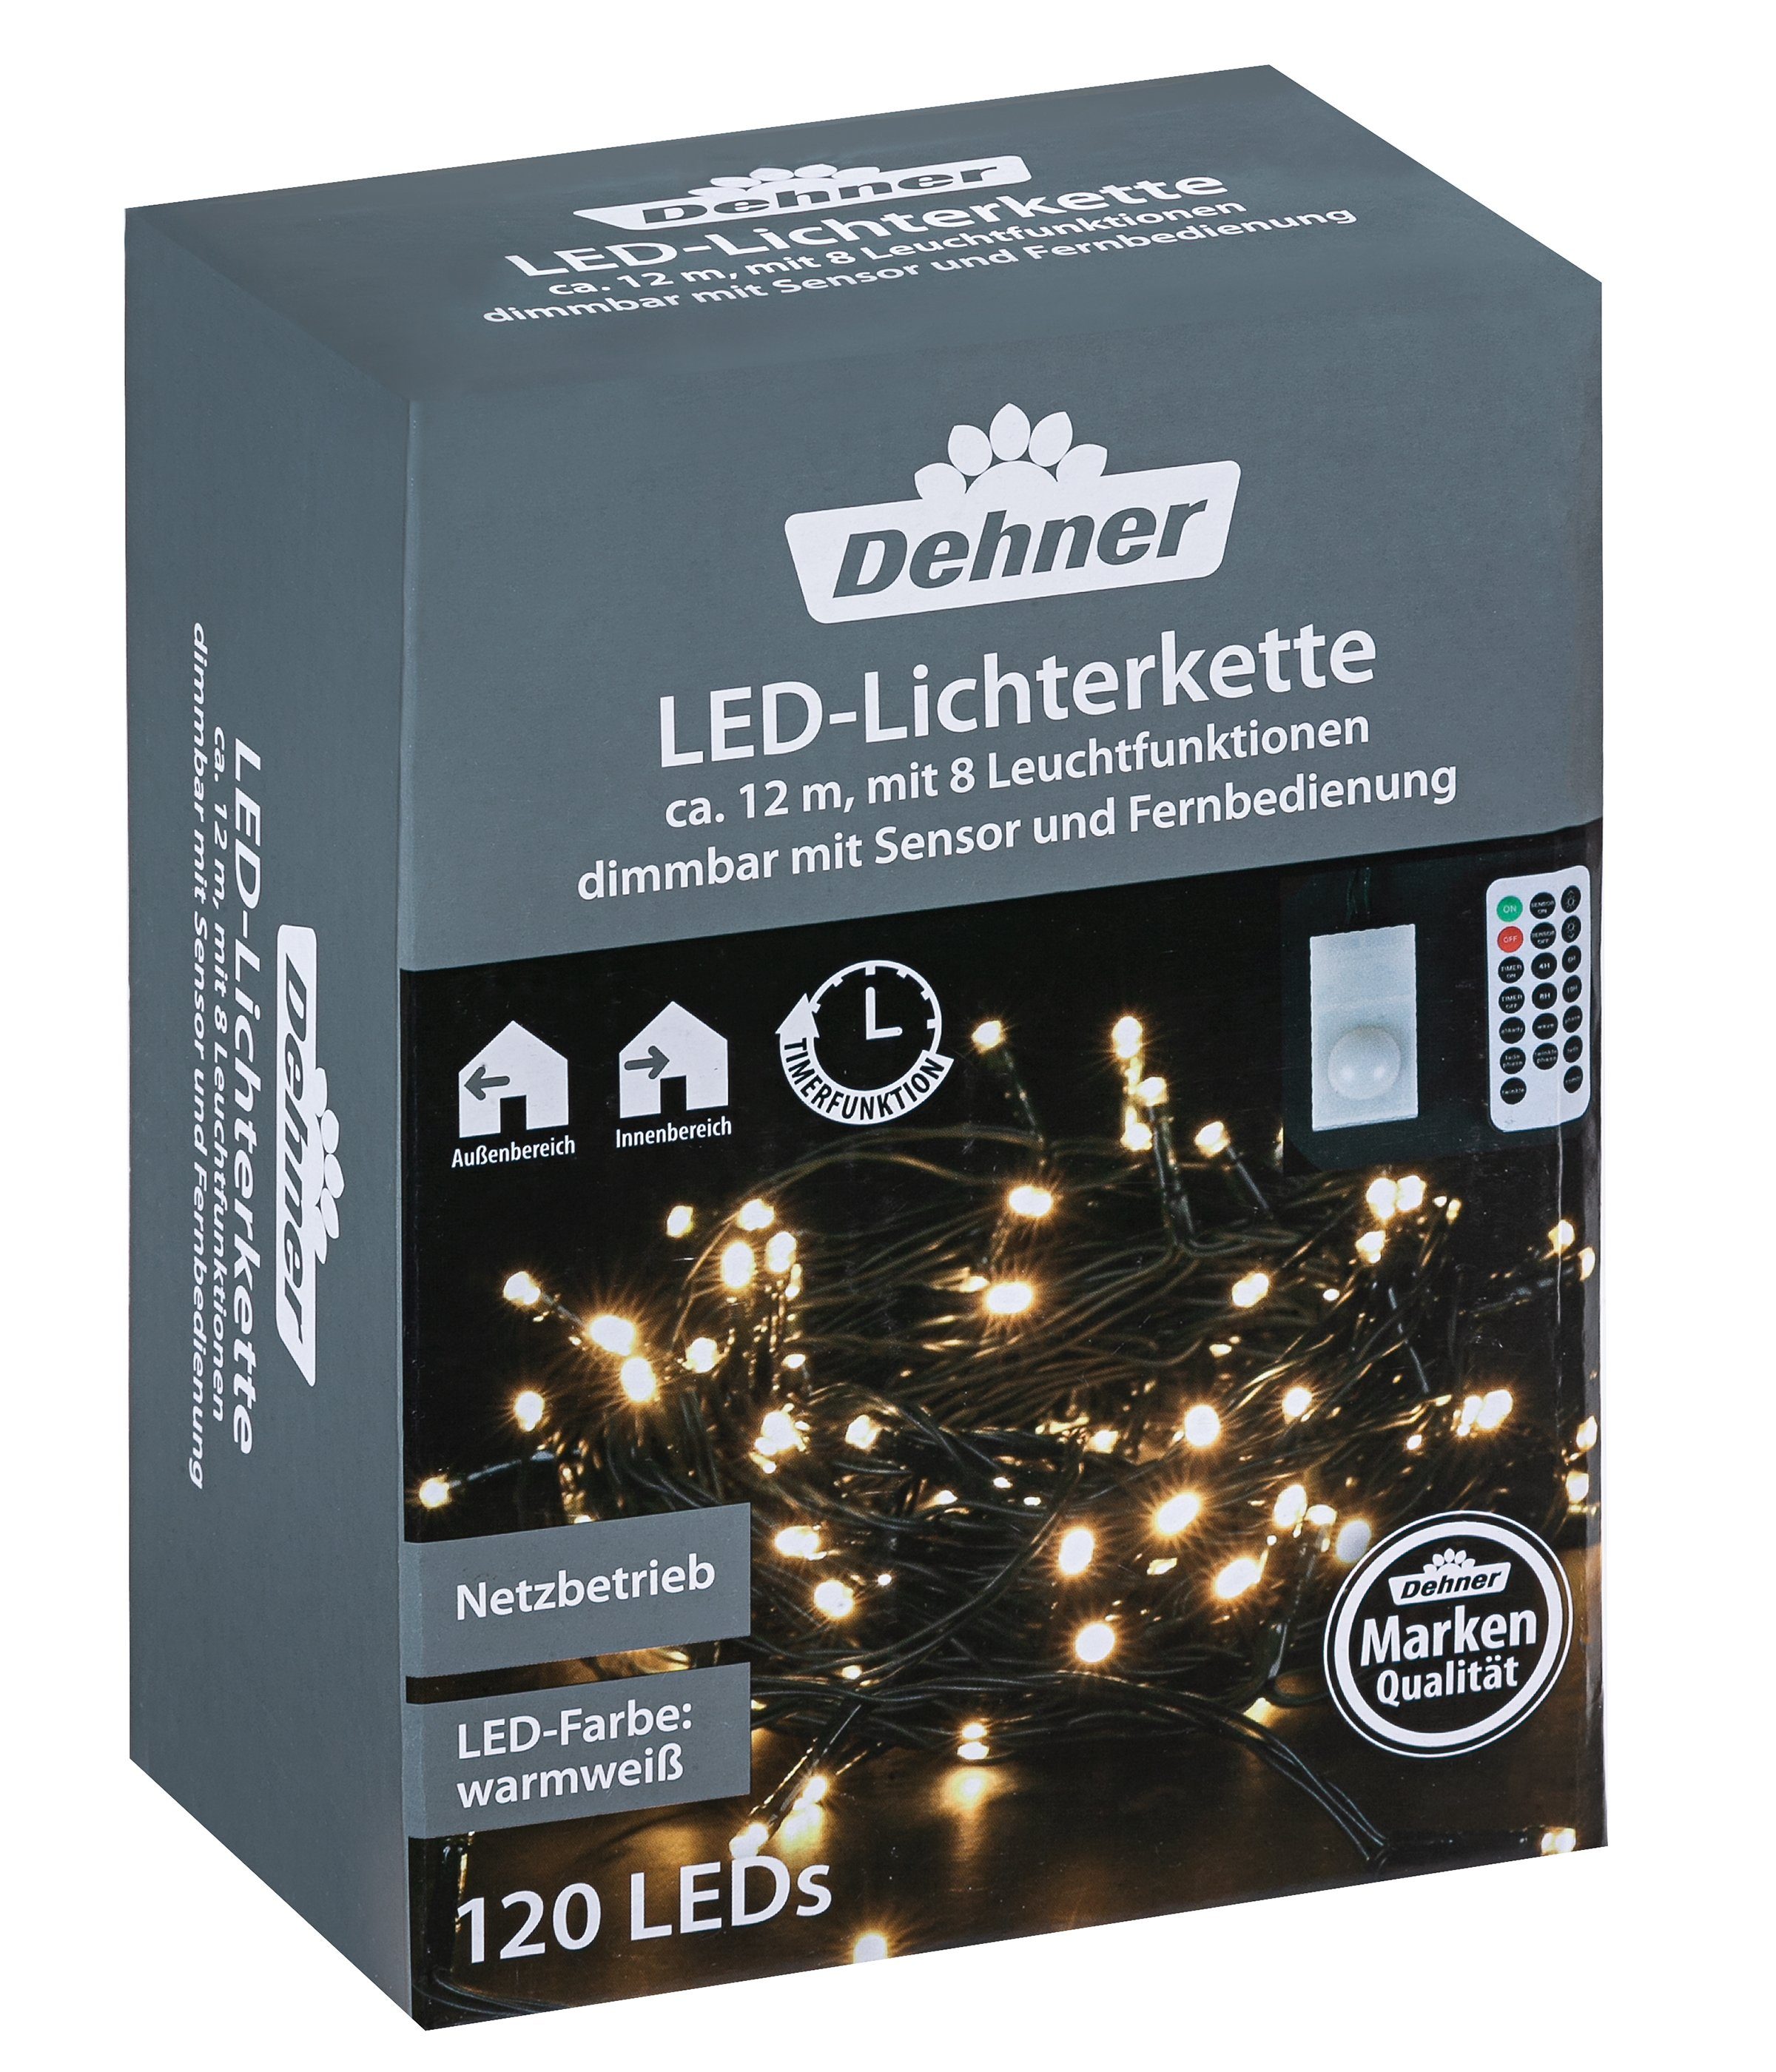 Dehner LED-Lichterkette LED-Lichterkette mit Sensor, 120 LEDs, Länge 12 m, wetterfest, dimmbar, Indoor/Outdoor, Timer, 8 Modi, Fernbedienung